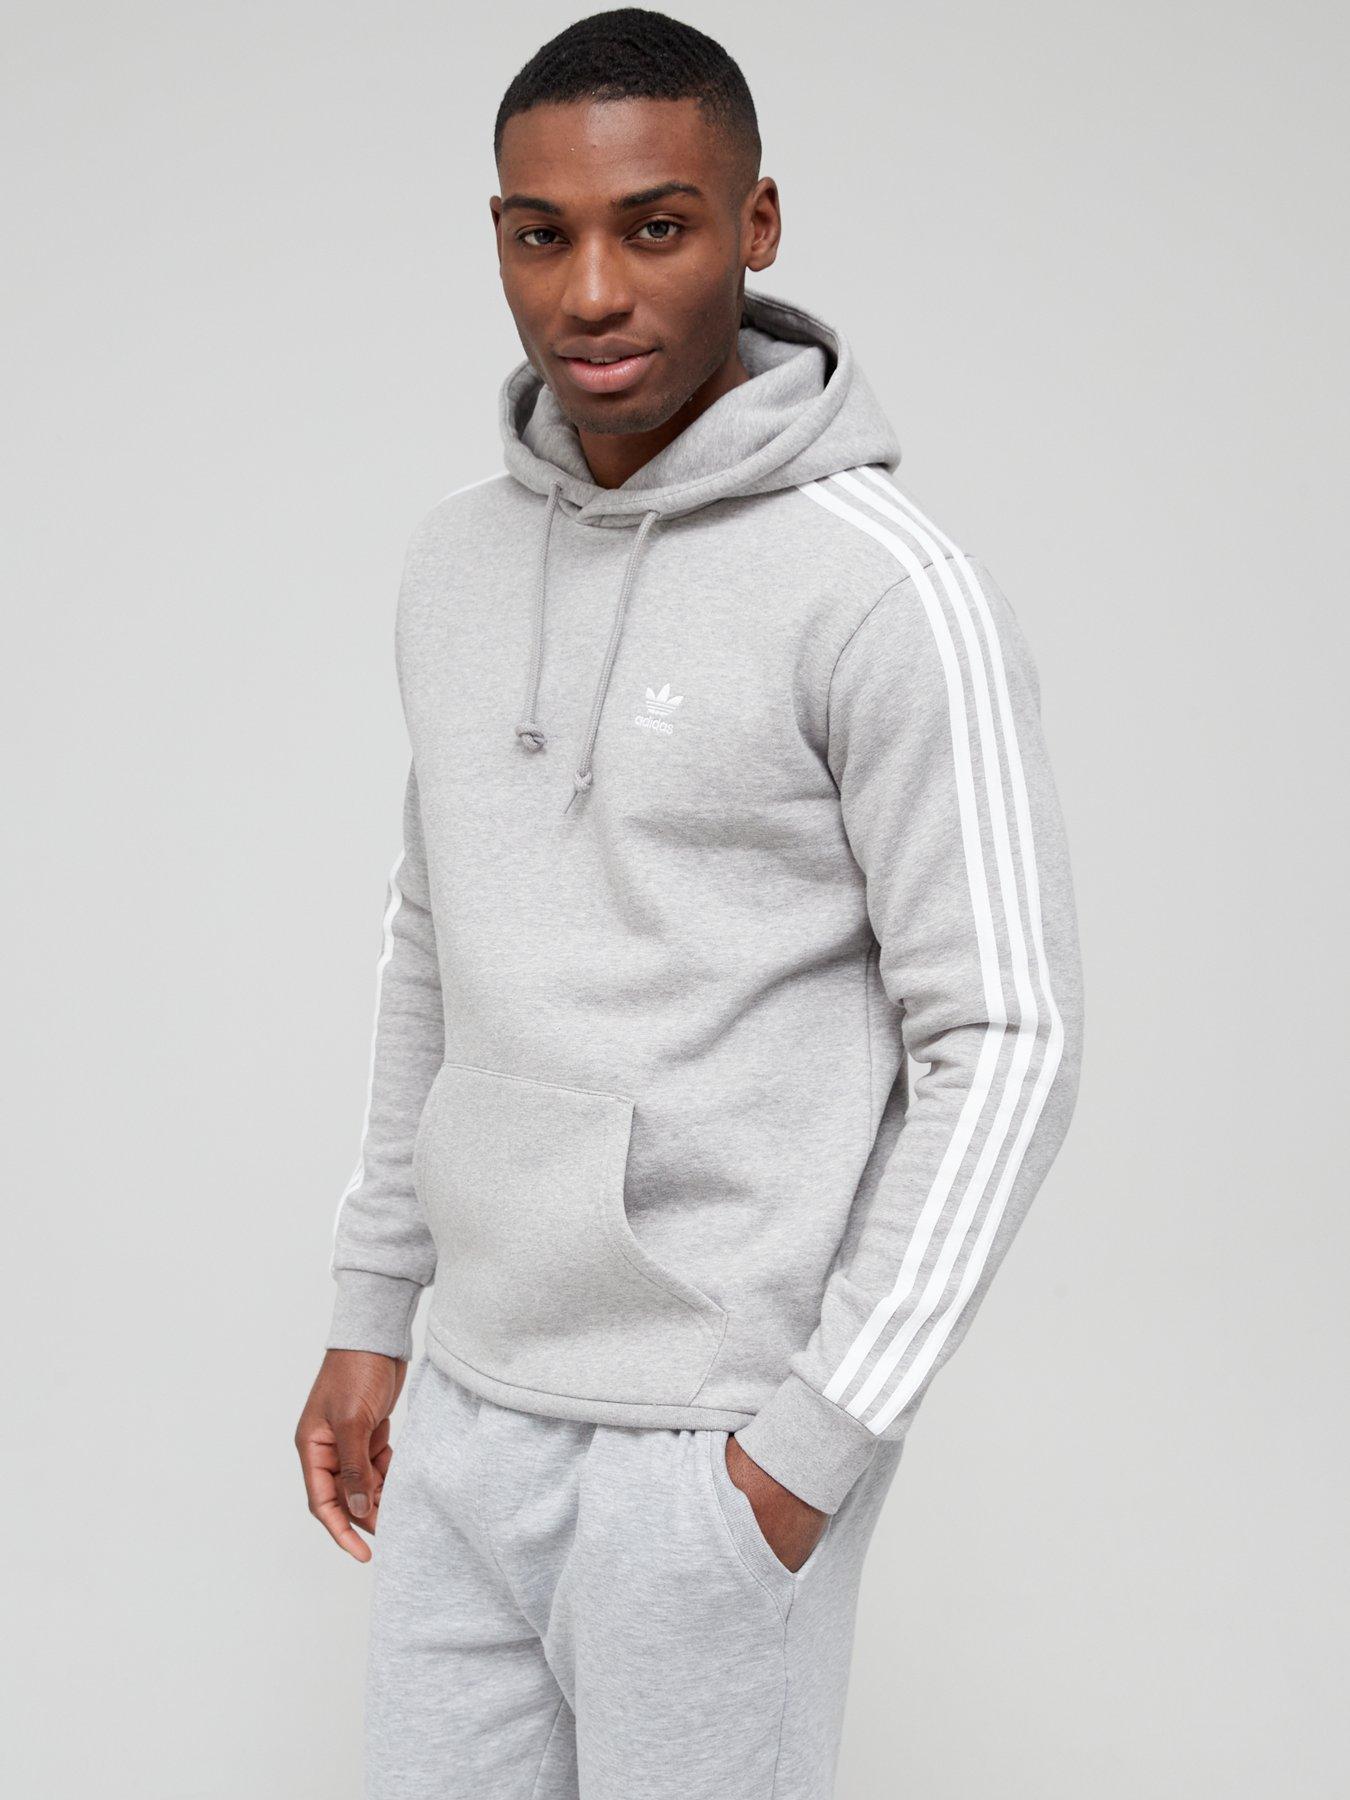 Mens Hoodies & Sweatshirts | Shop & Sweatshirts at Very.co.uk